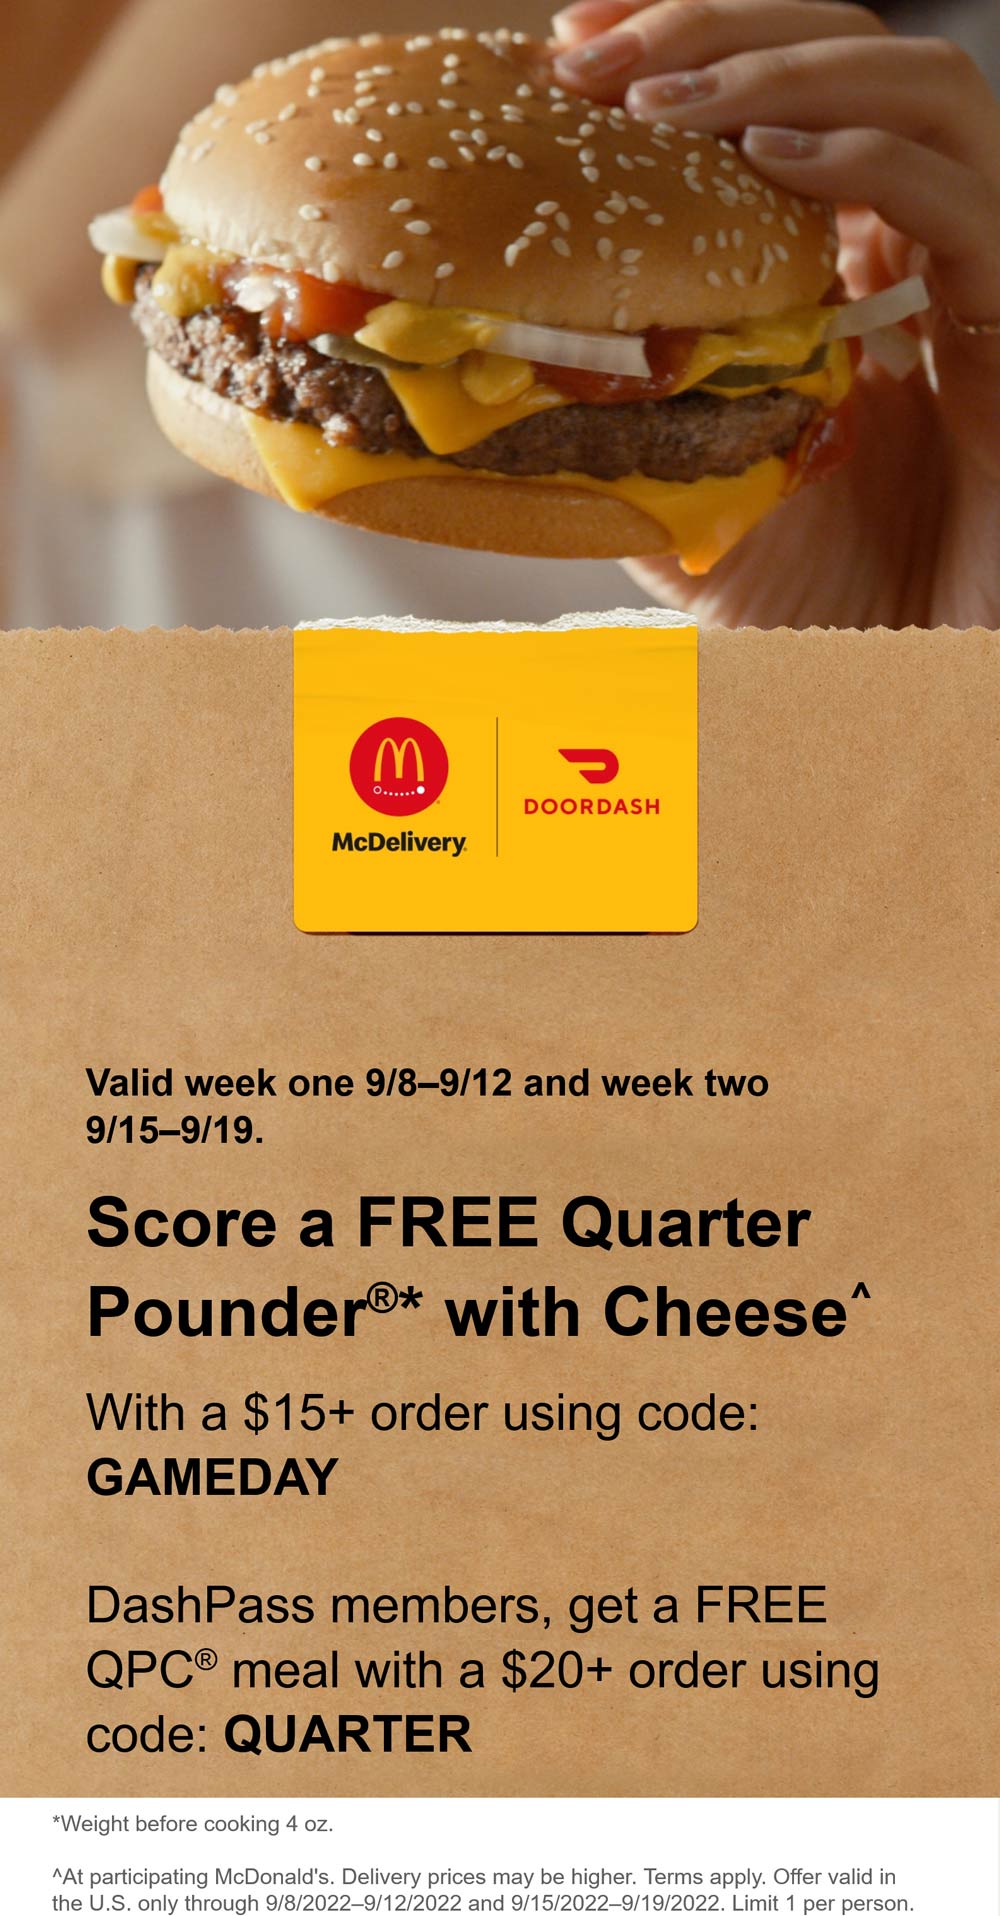 McDonalds restaurants Coupon  Free quarter pounder cheeseburger on $15 delivery & more at McDonalds via promo code GAMEDAY #mcdonalds 